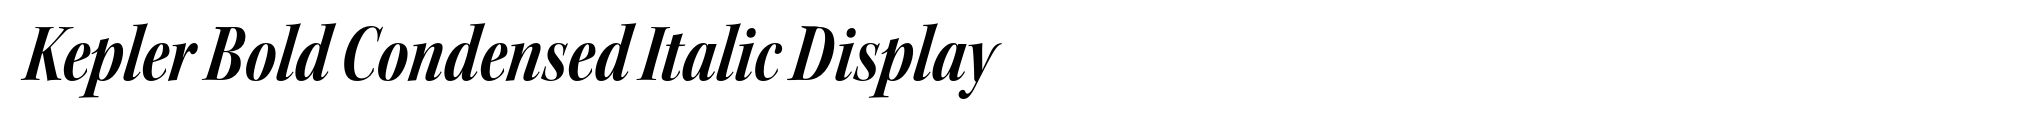 Kepler Bold Condensed Italic Display image